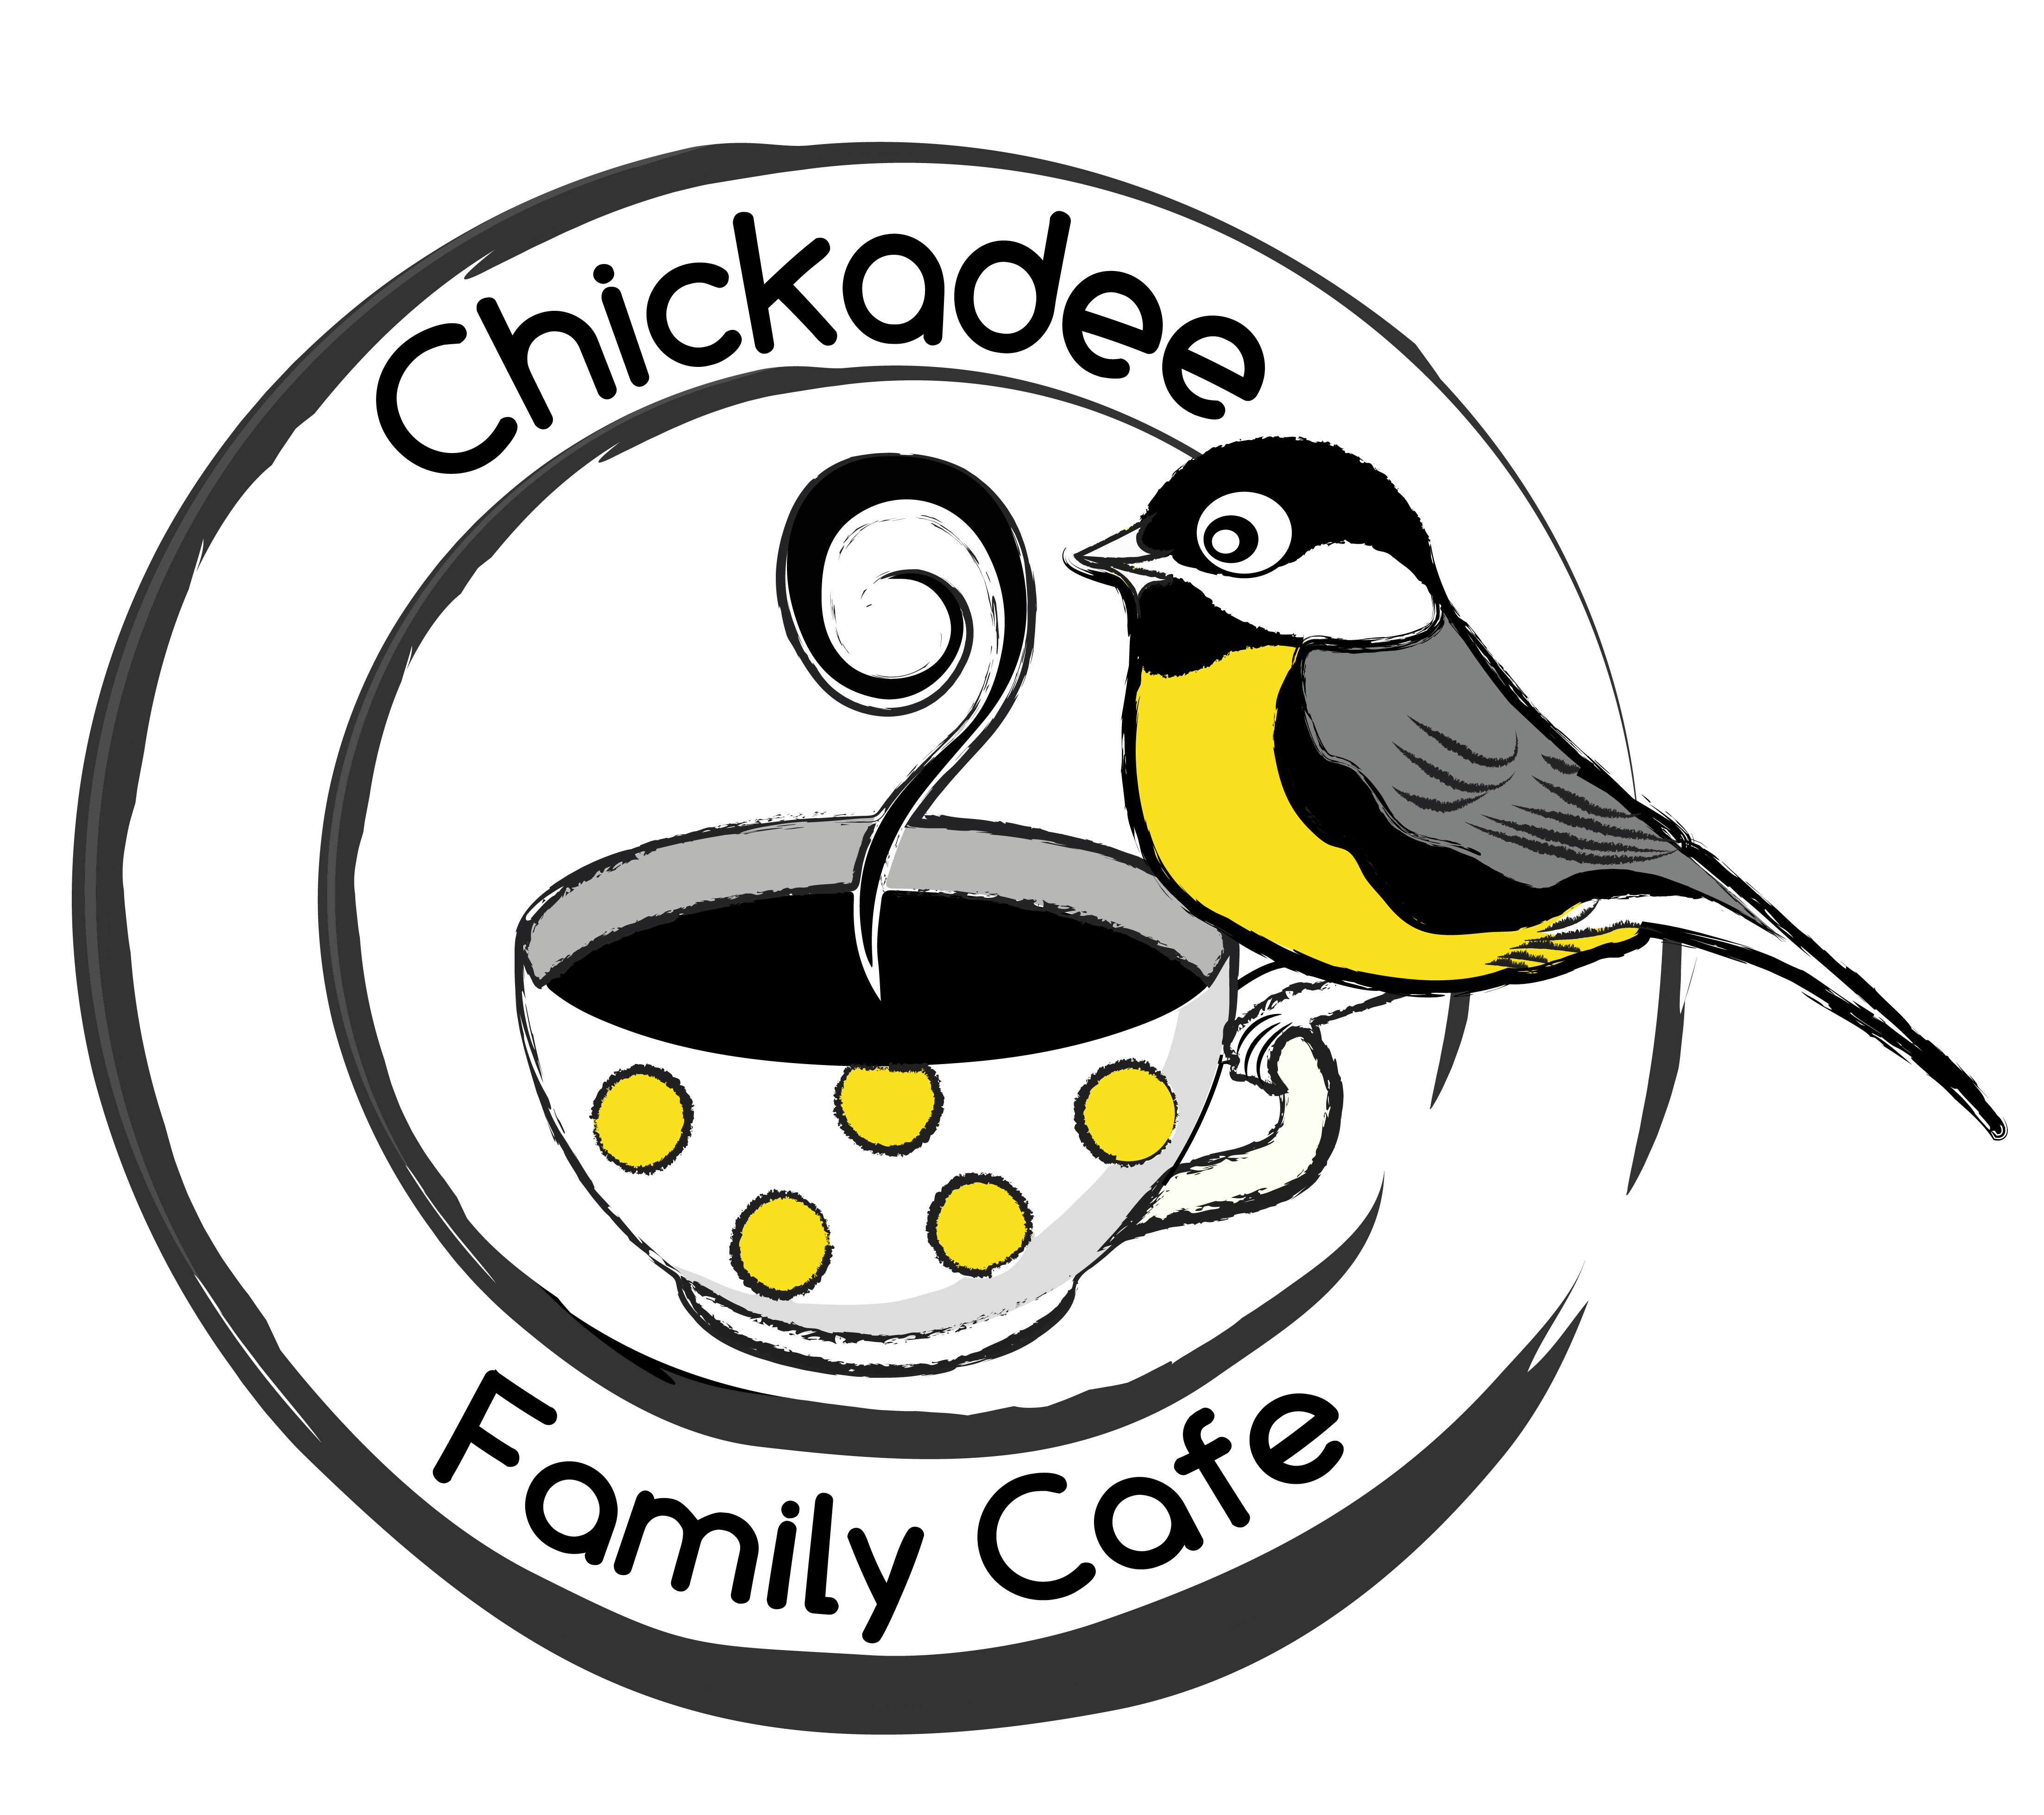 Chickadee Family Cafe